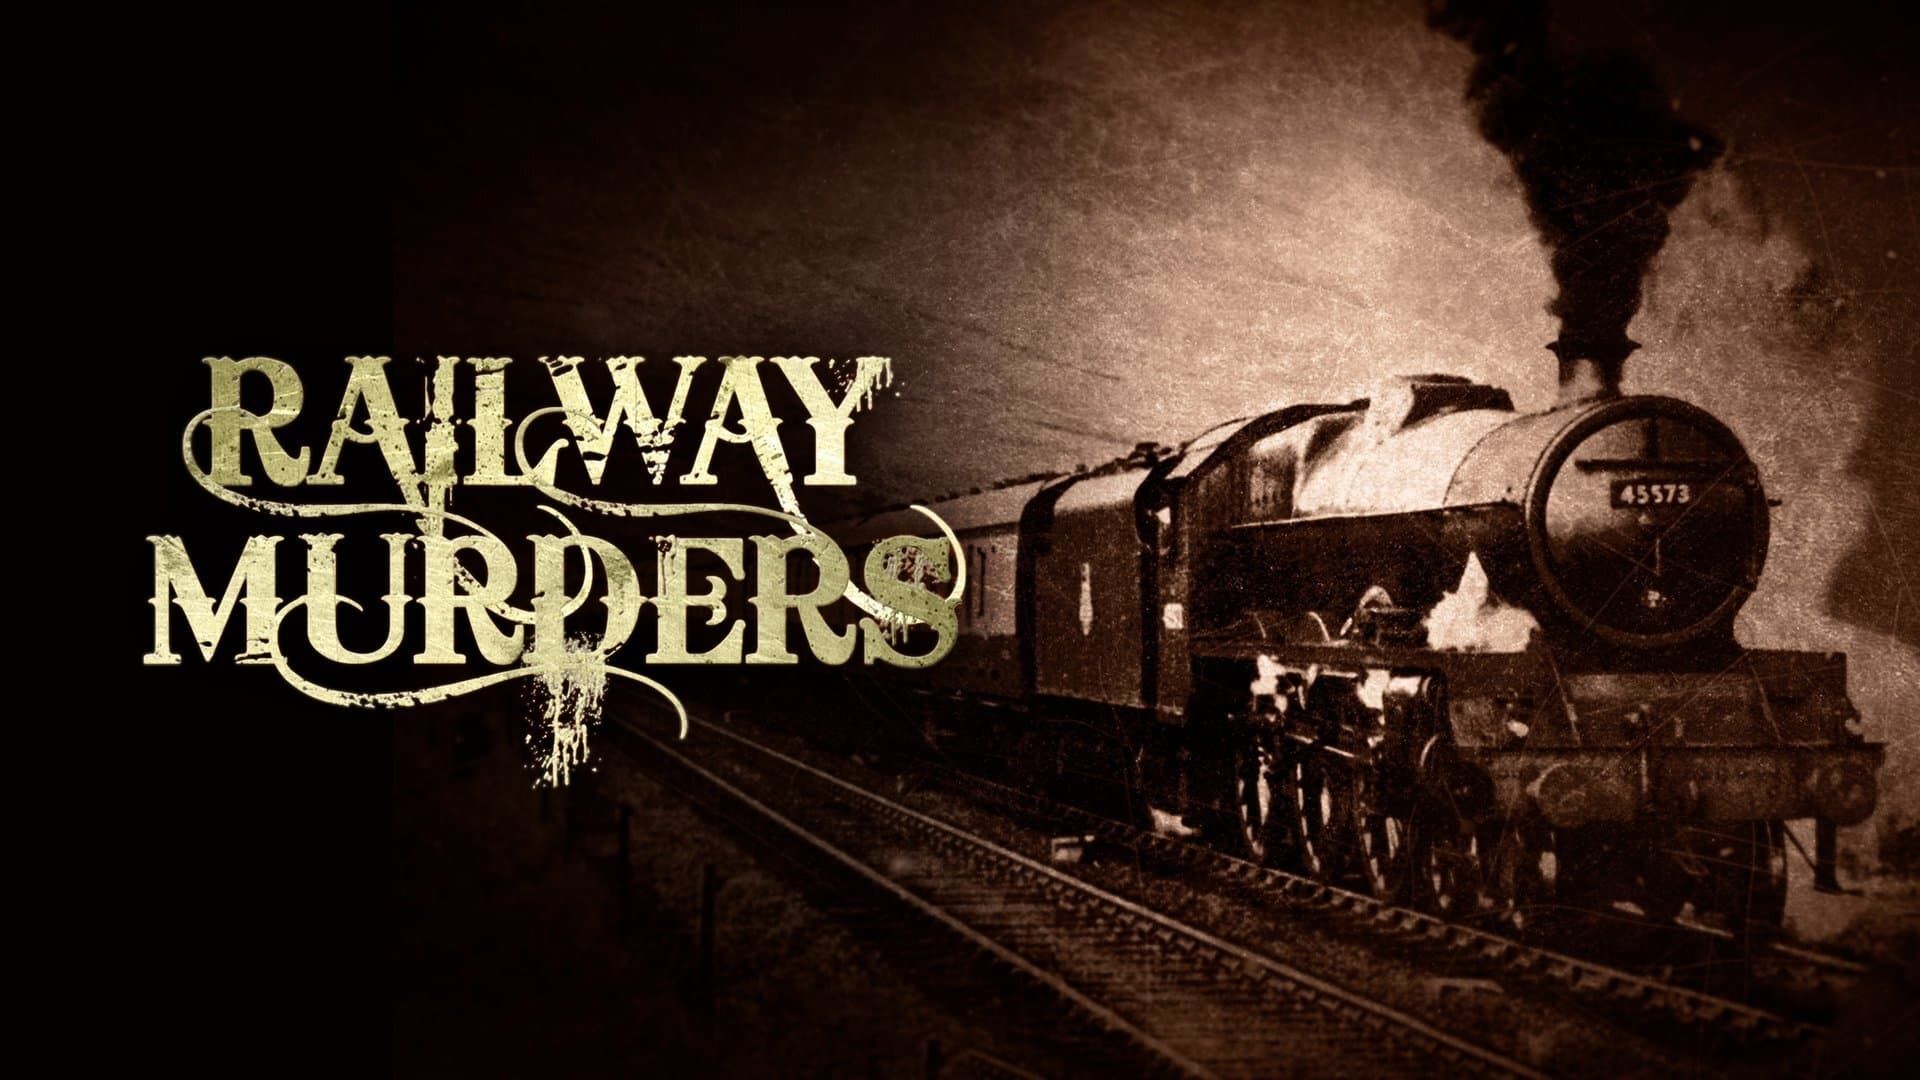 Railway Murders background